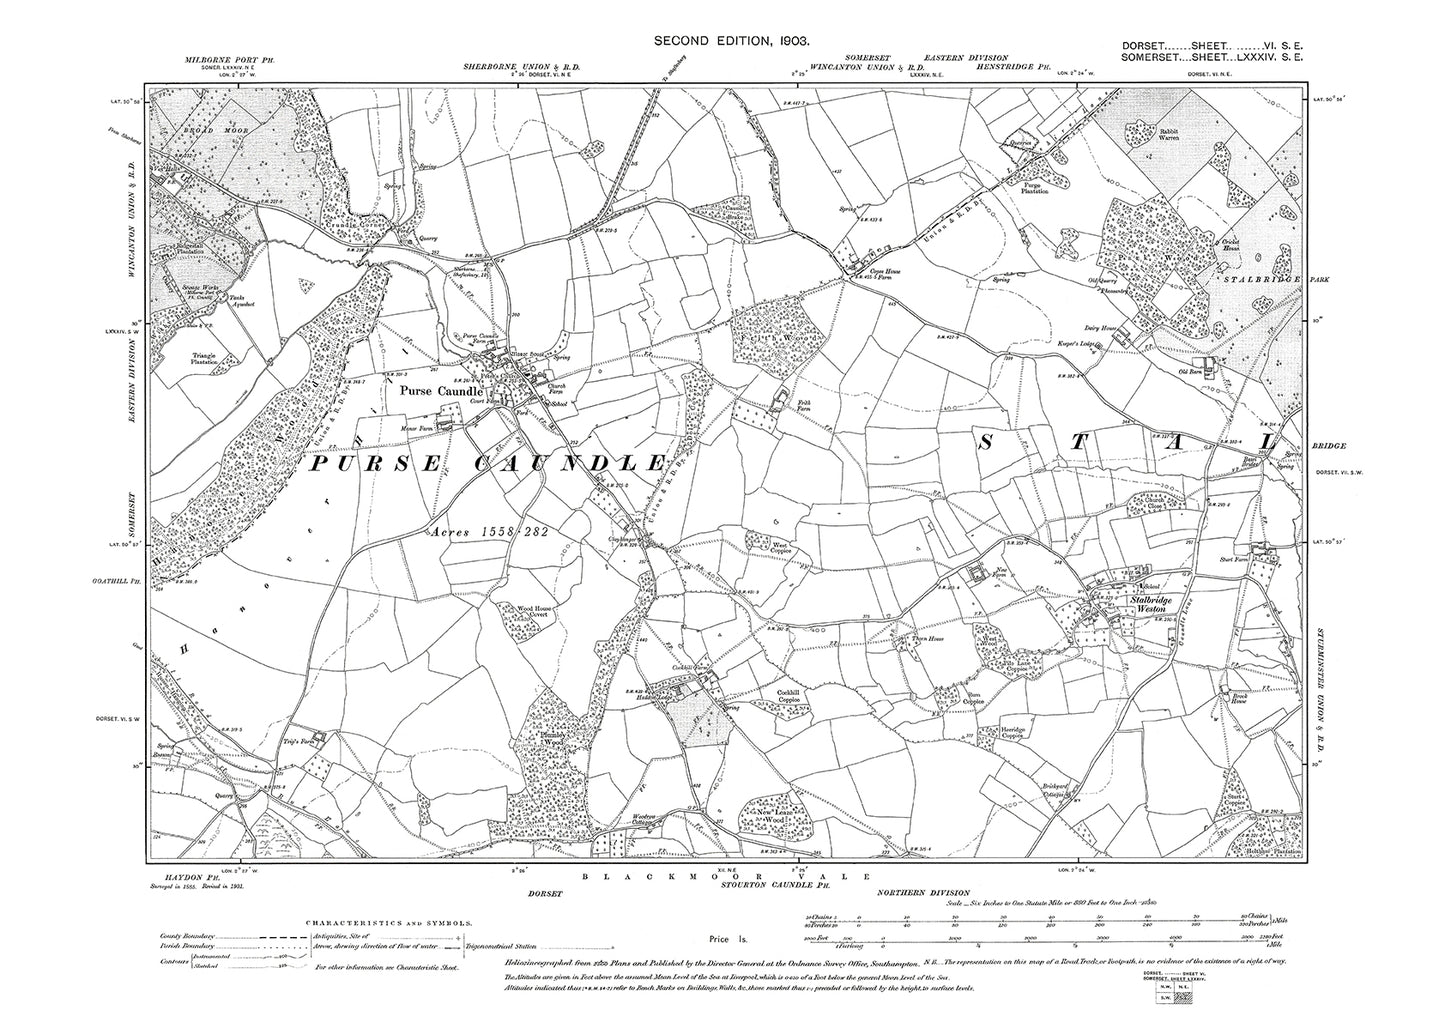 Old OS map dated 1903, showing Purse Caundle, Stalbridge Weston in Dorset - 6SE